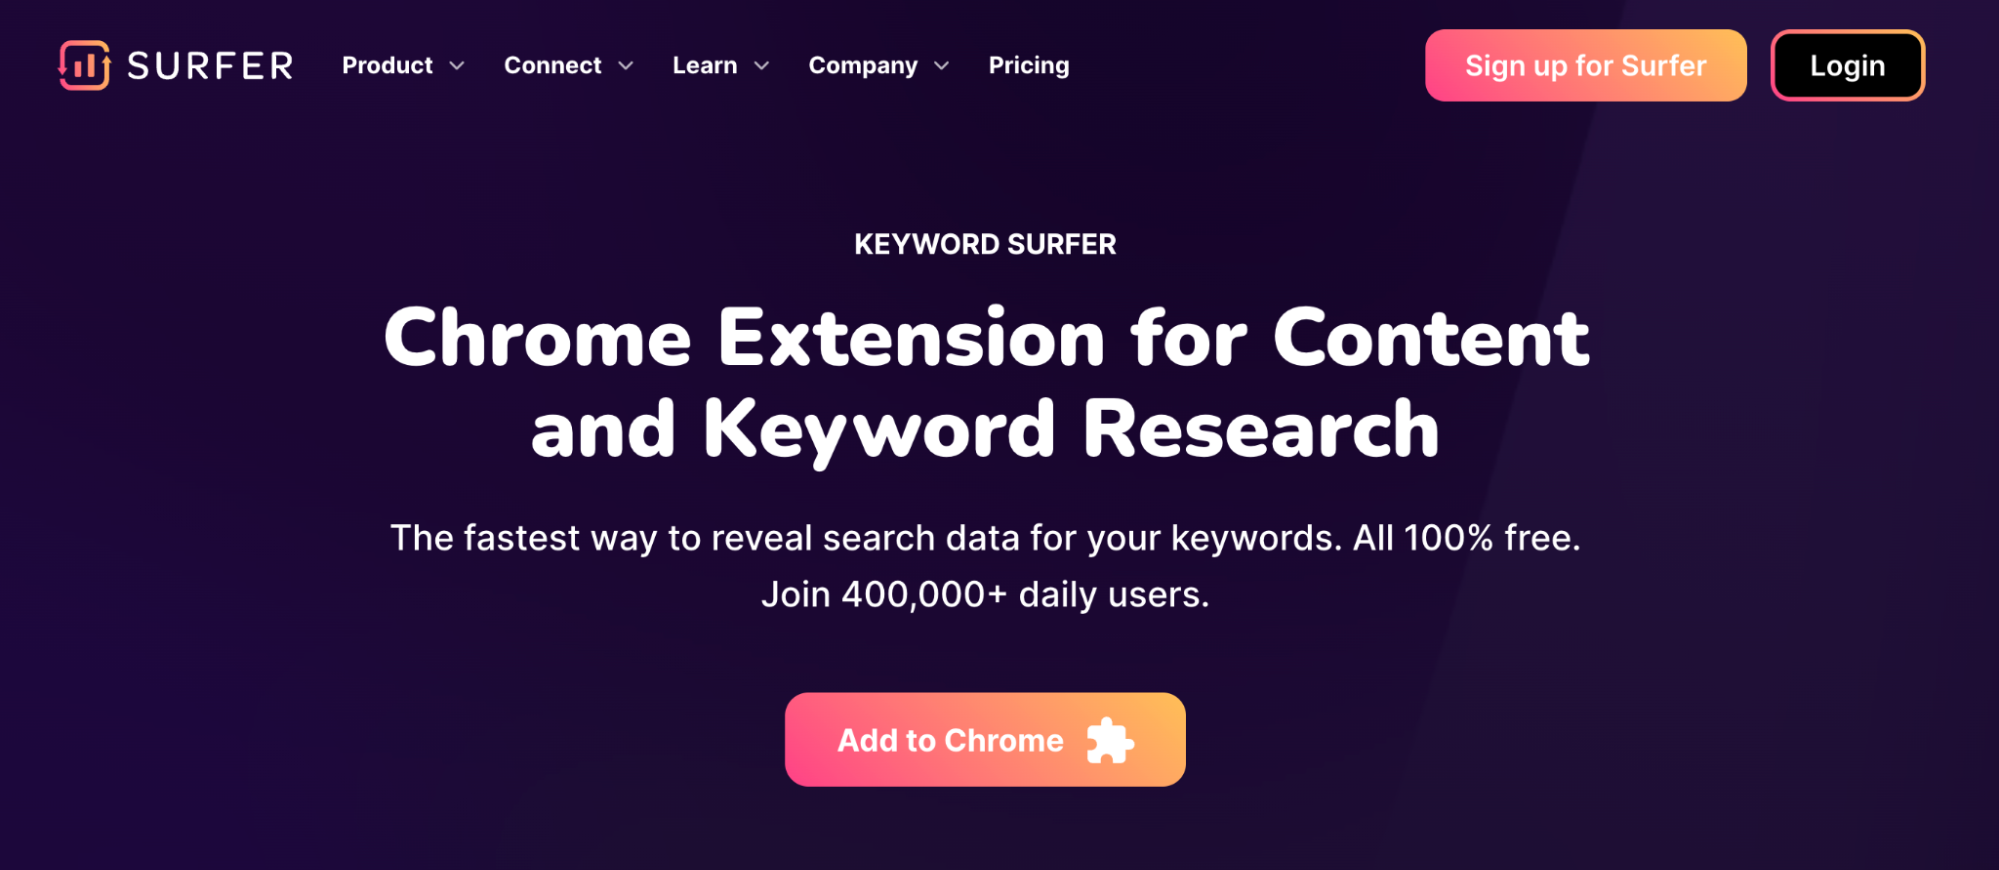 Best free keyword research tools: Keyword Surfer.